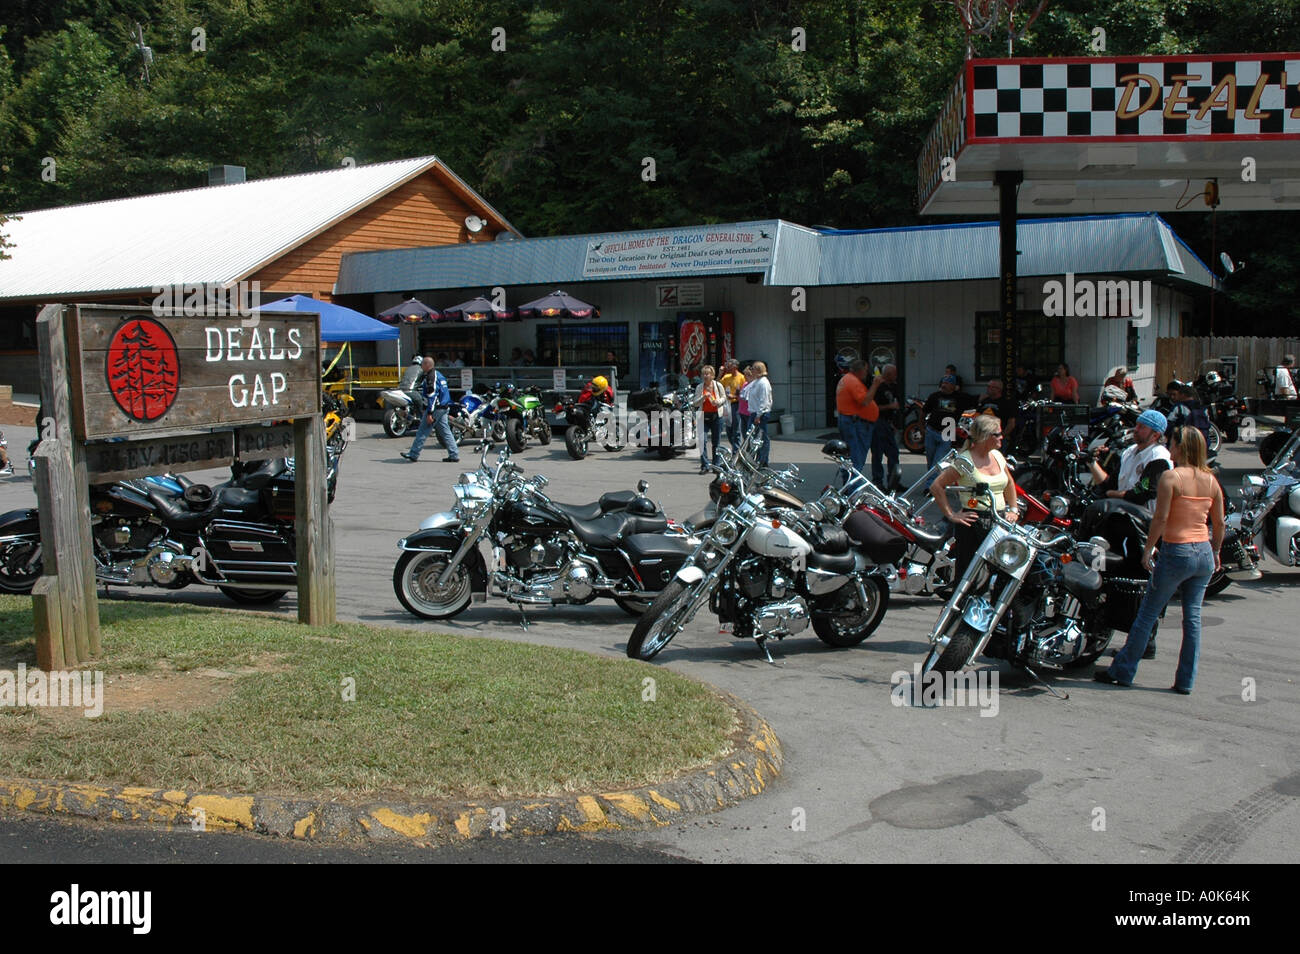 P31 276 Deals Gap Motorcycle Resort North Carolina 4 Stock Photo